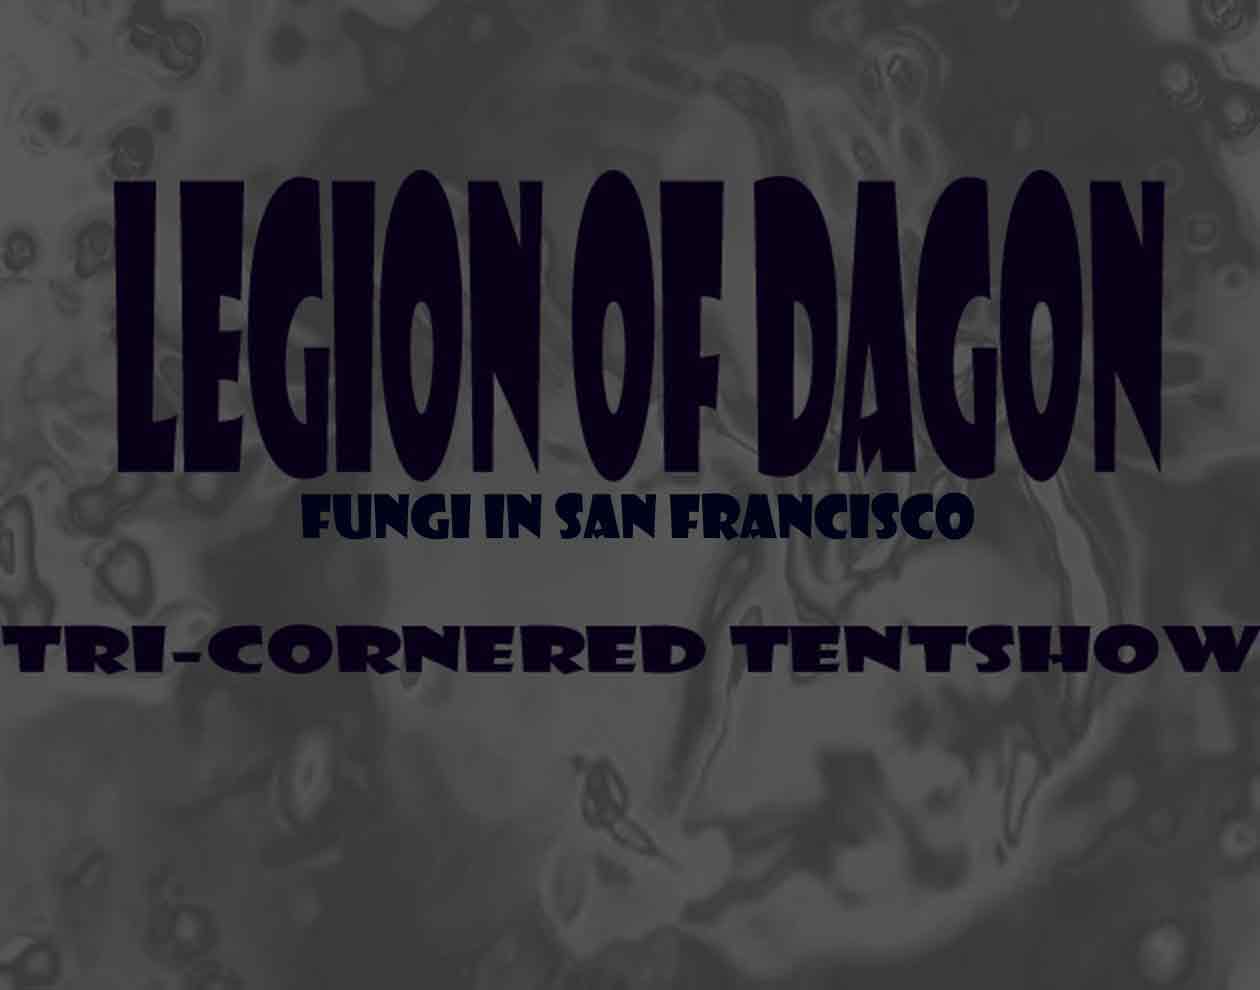 Tri-Cornered Tent Show - Legion of Dagon